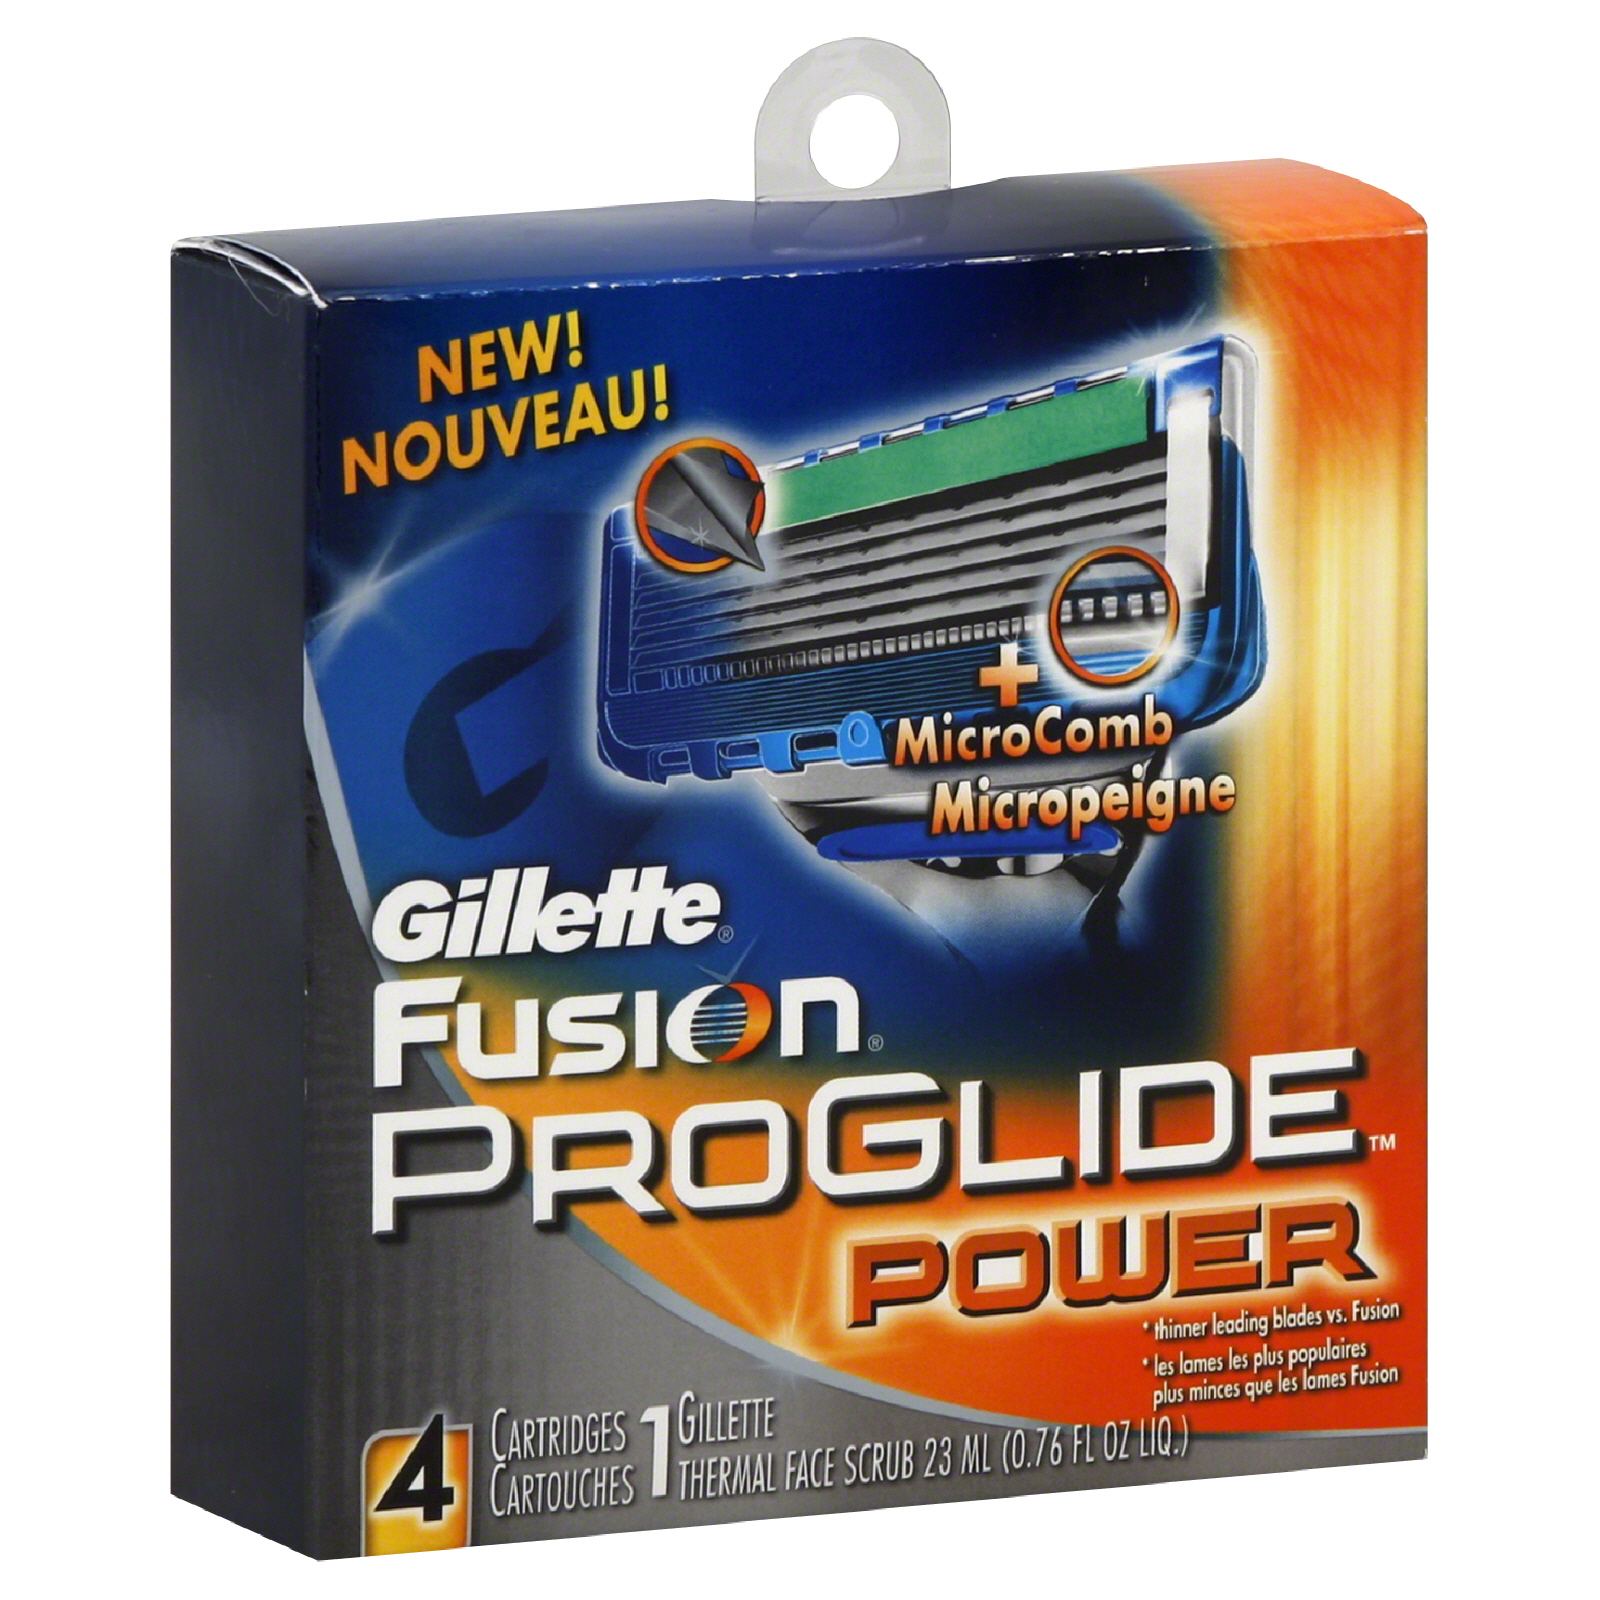 Gillette Fusion ProGlide Cartridges, Power, 1 kit